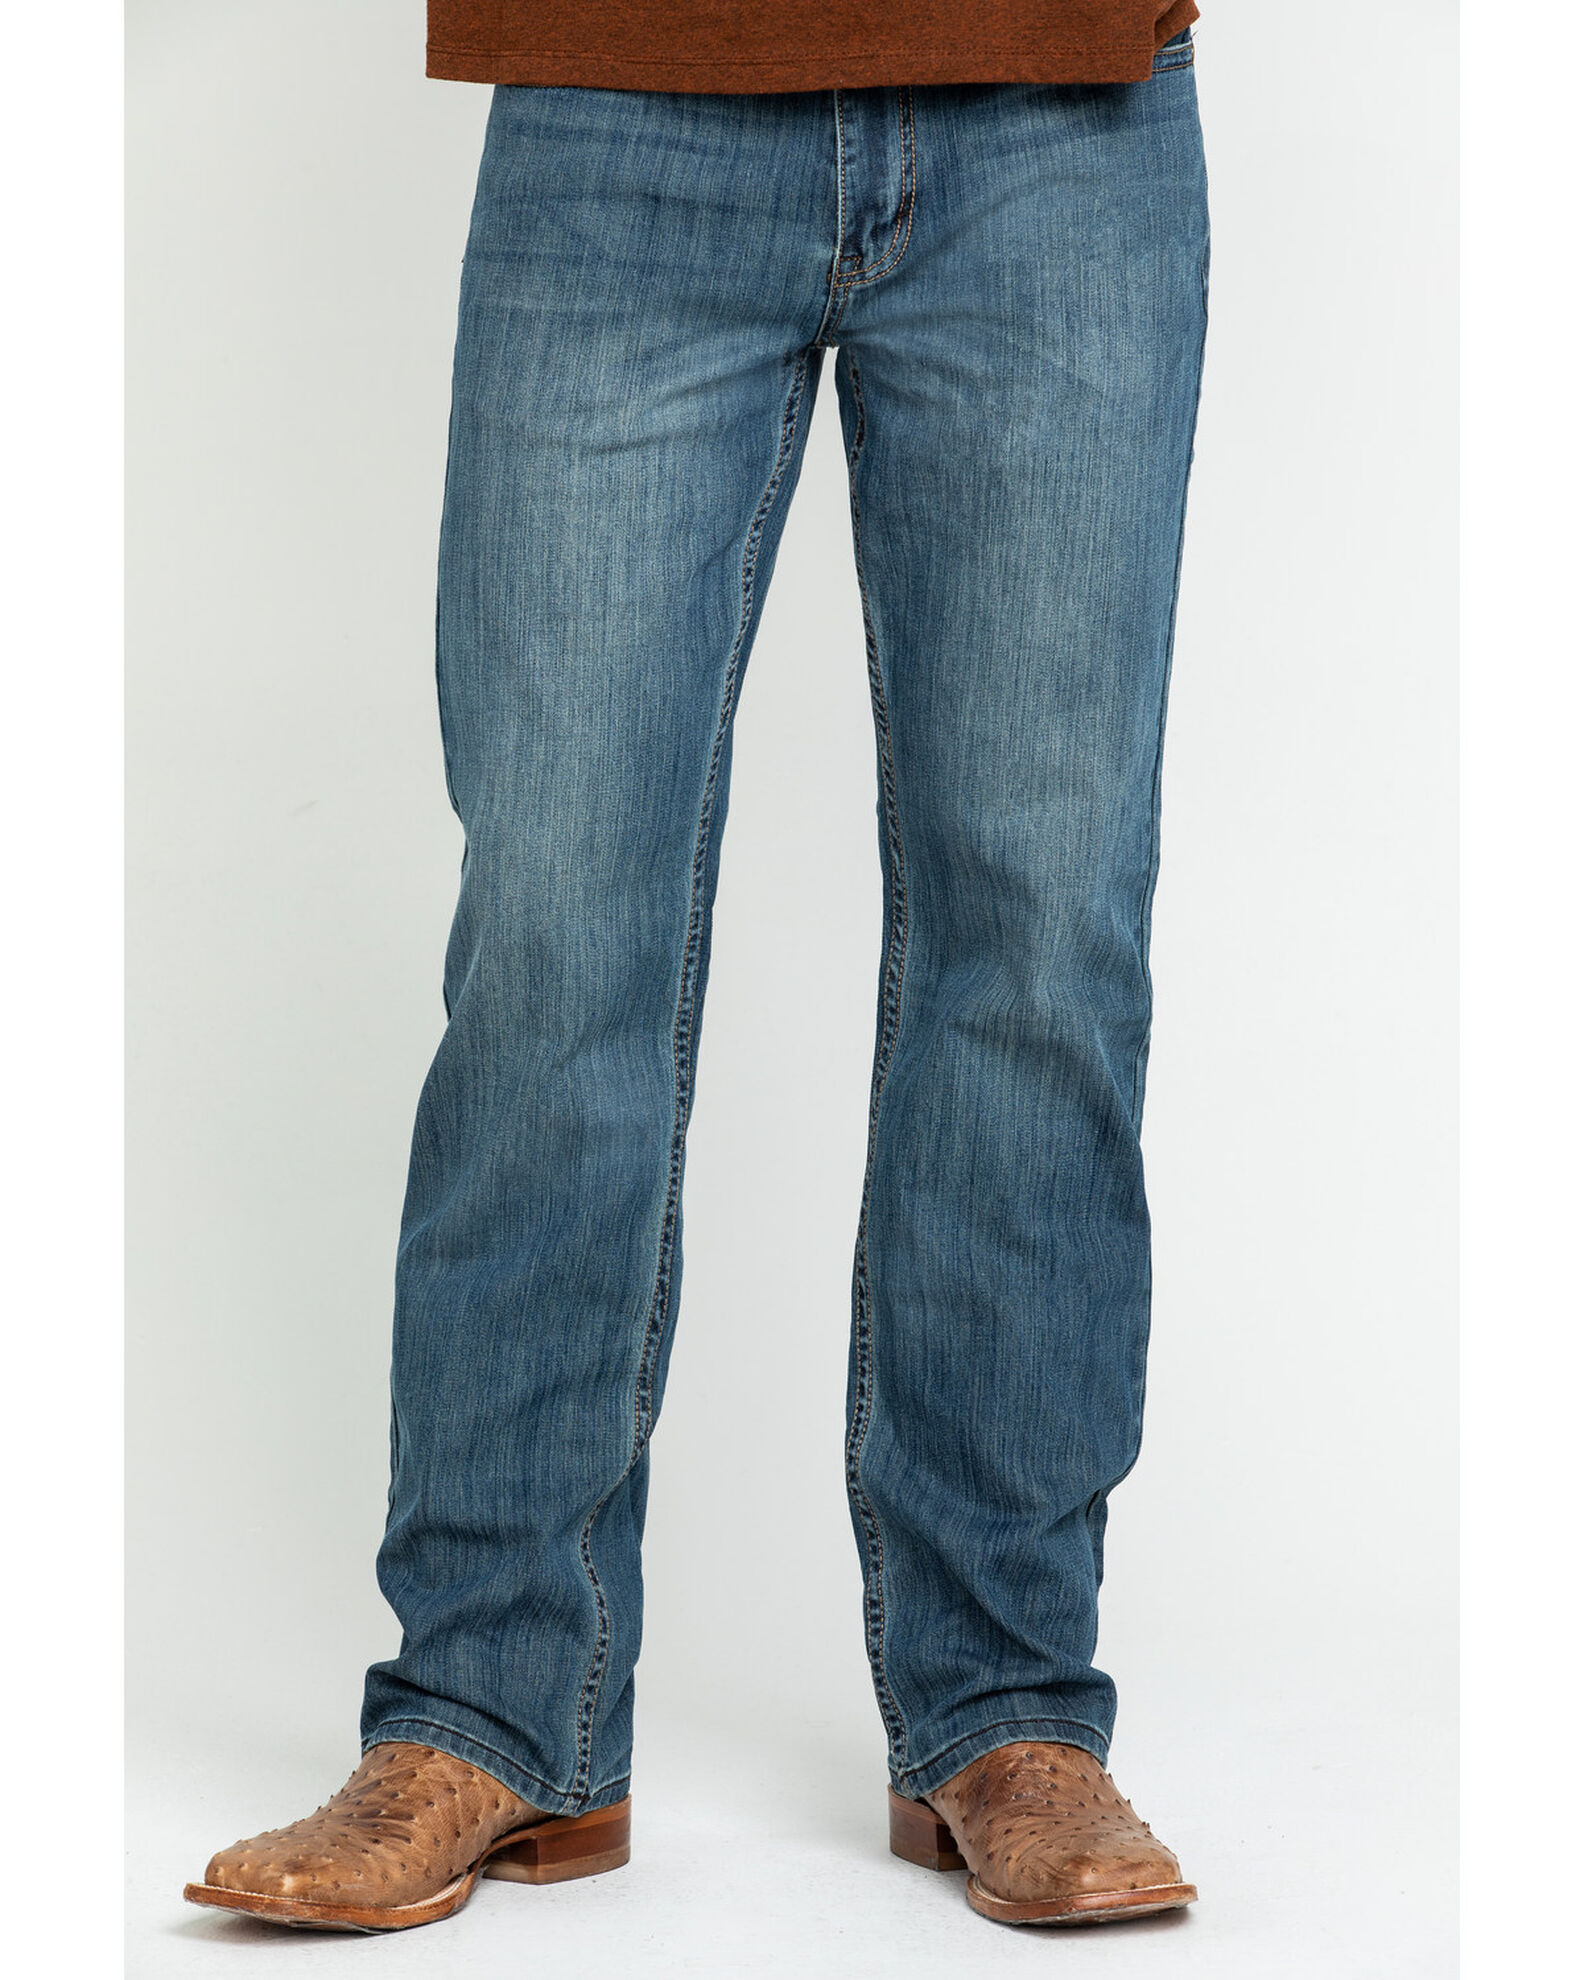 Cody James Men's Bozeman Medium Wash Stretch Slim Bootcut Jeans